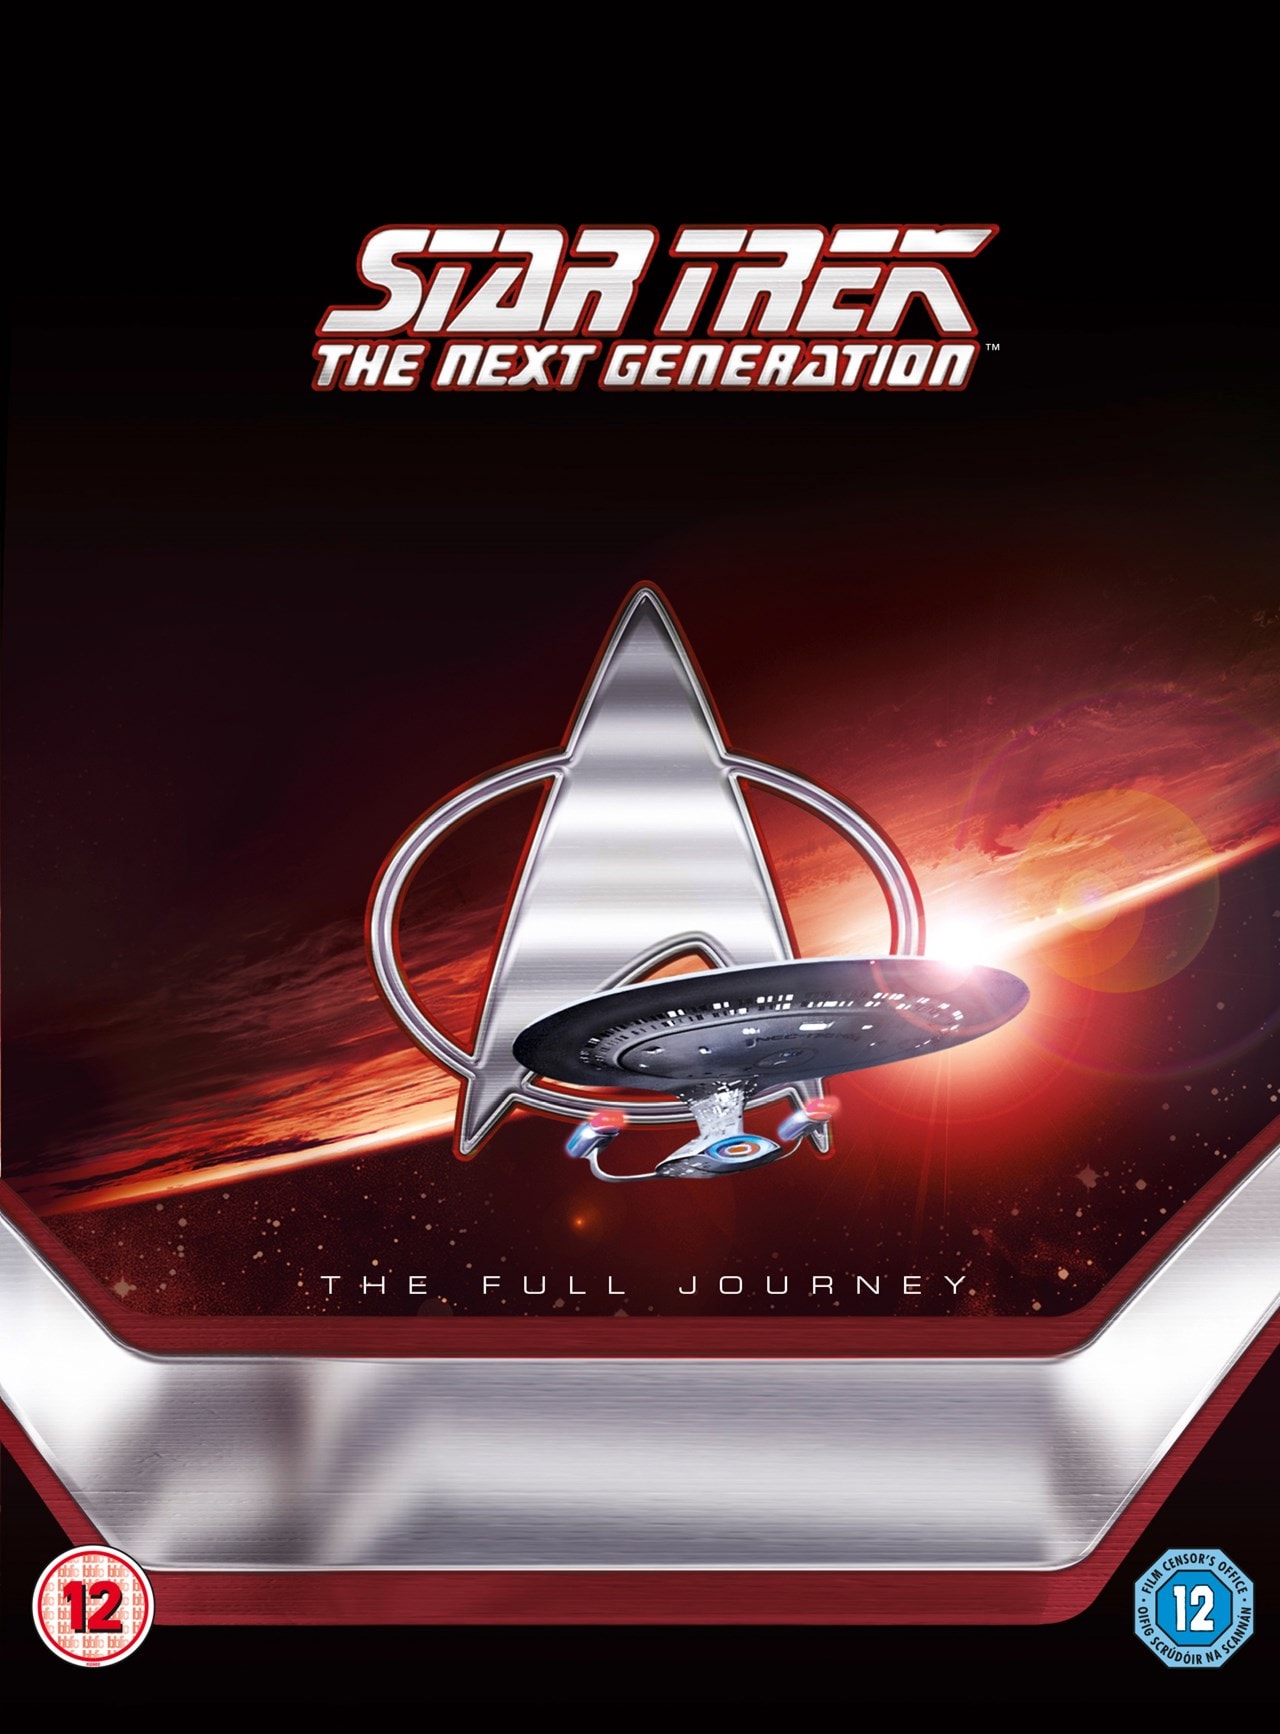 Star Trek The Next Generation The Complete Seasons 1 7 Dvd Box Set Free Shipping Over Hmv Store